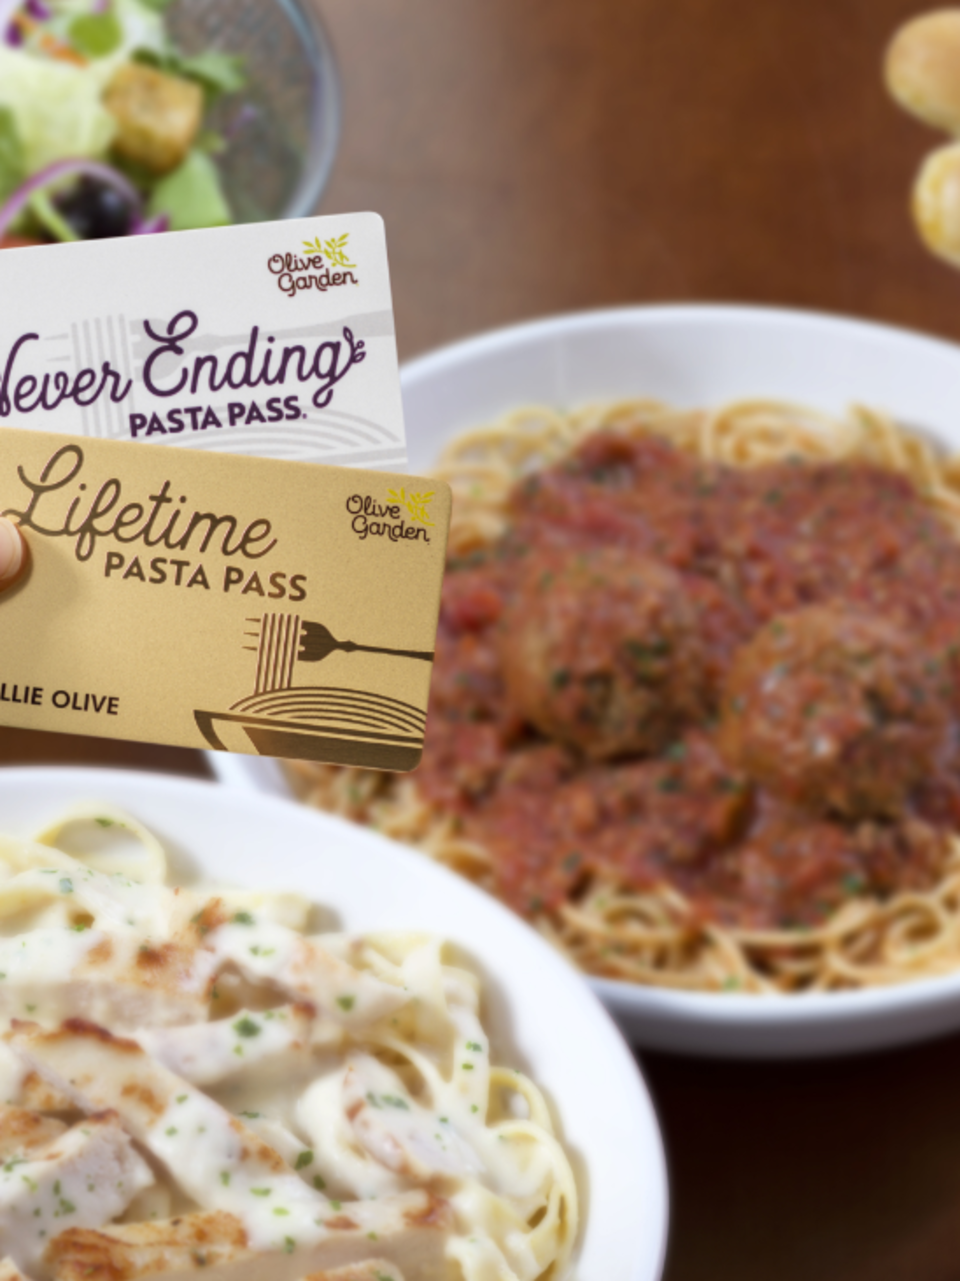 Olive Garden To Offer Lifetime Pasta Pass Katu